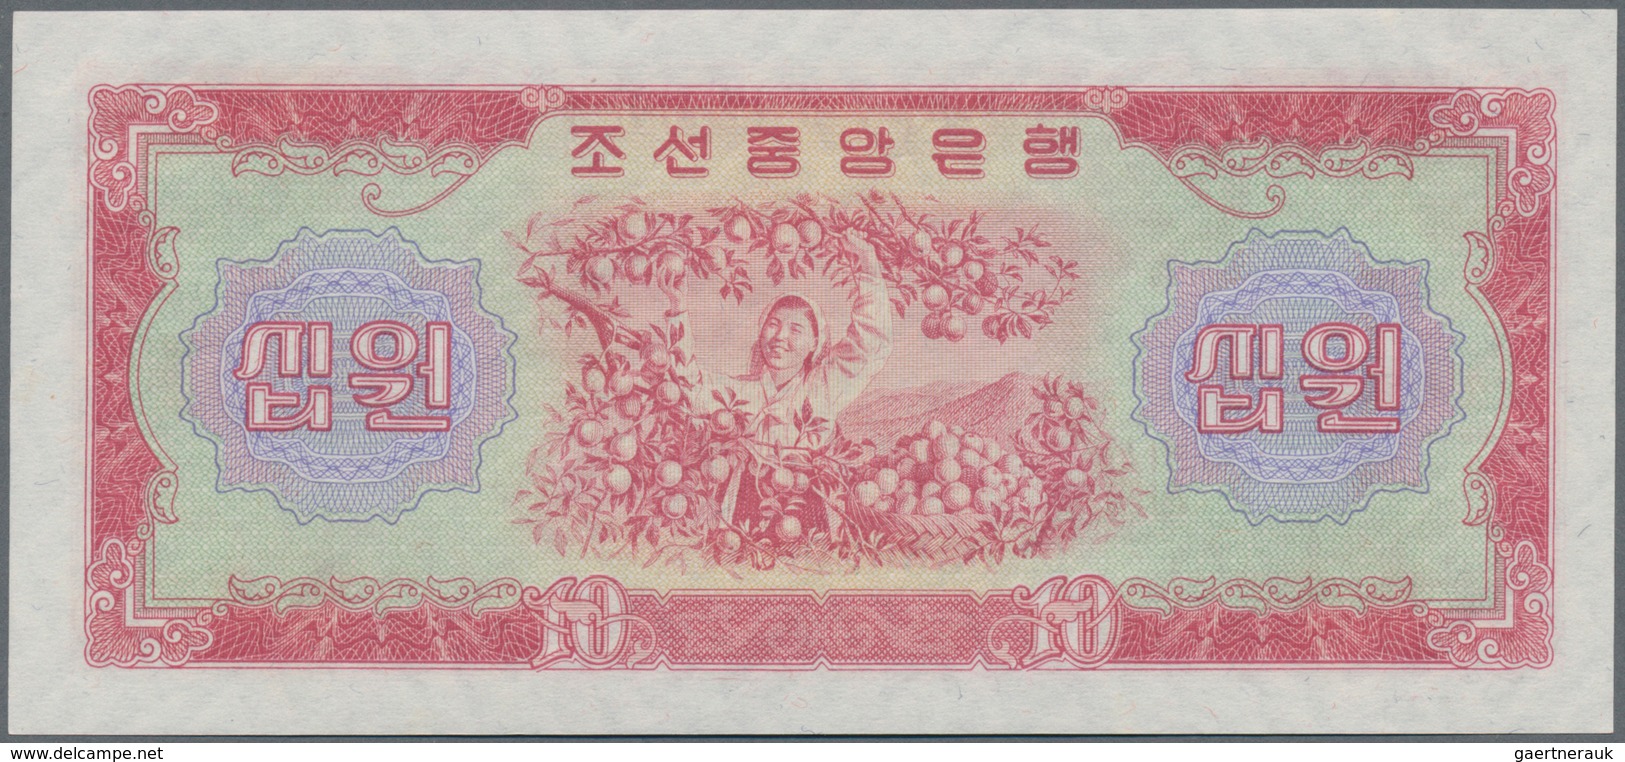 North Korea / Banknoten: Central Bank of the Democratic Peoples Republic of Korea, set with 6 bankno